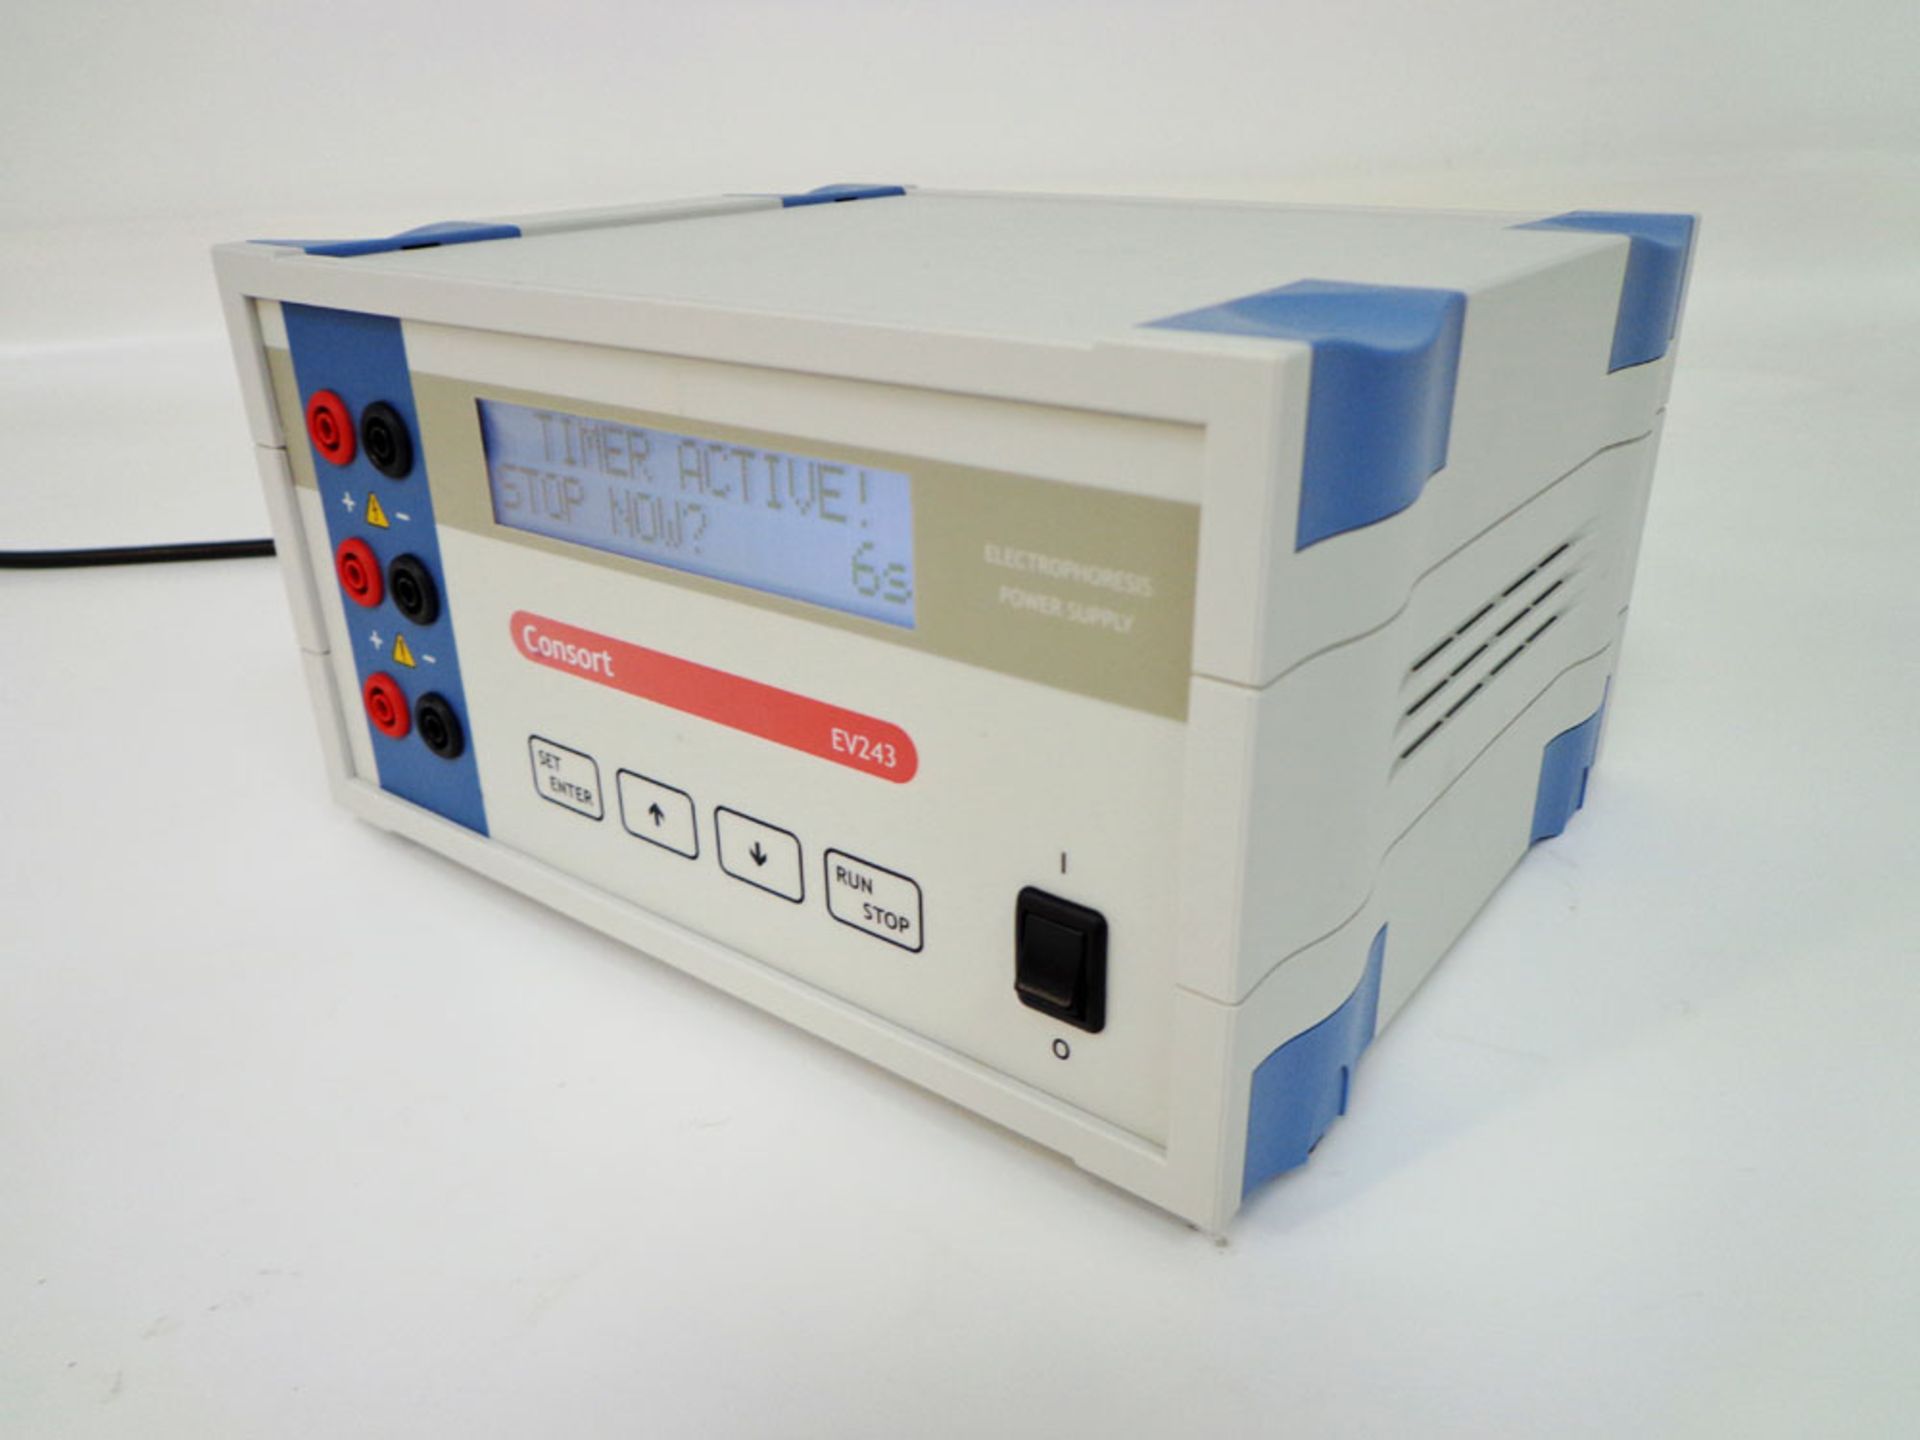 Consort EV231 Electrophoresis Power Supply, serial number 88775 (Ref: WA11812)